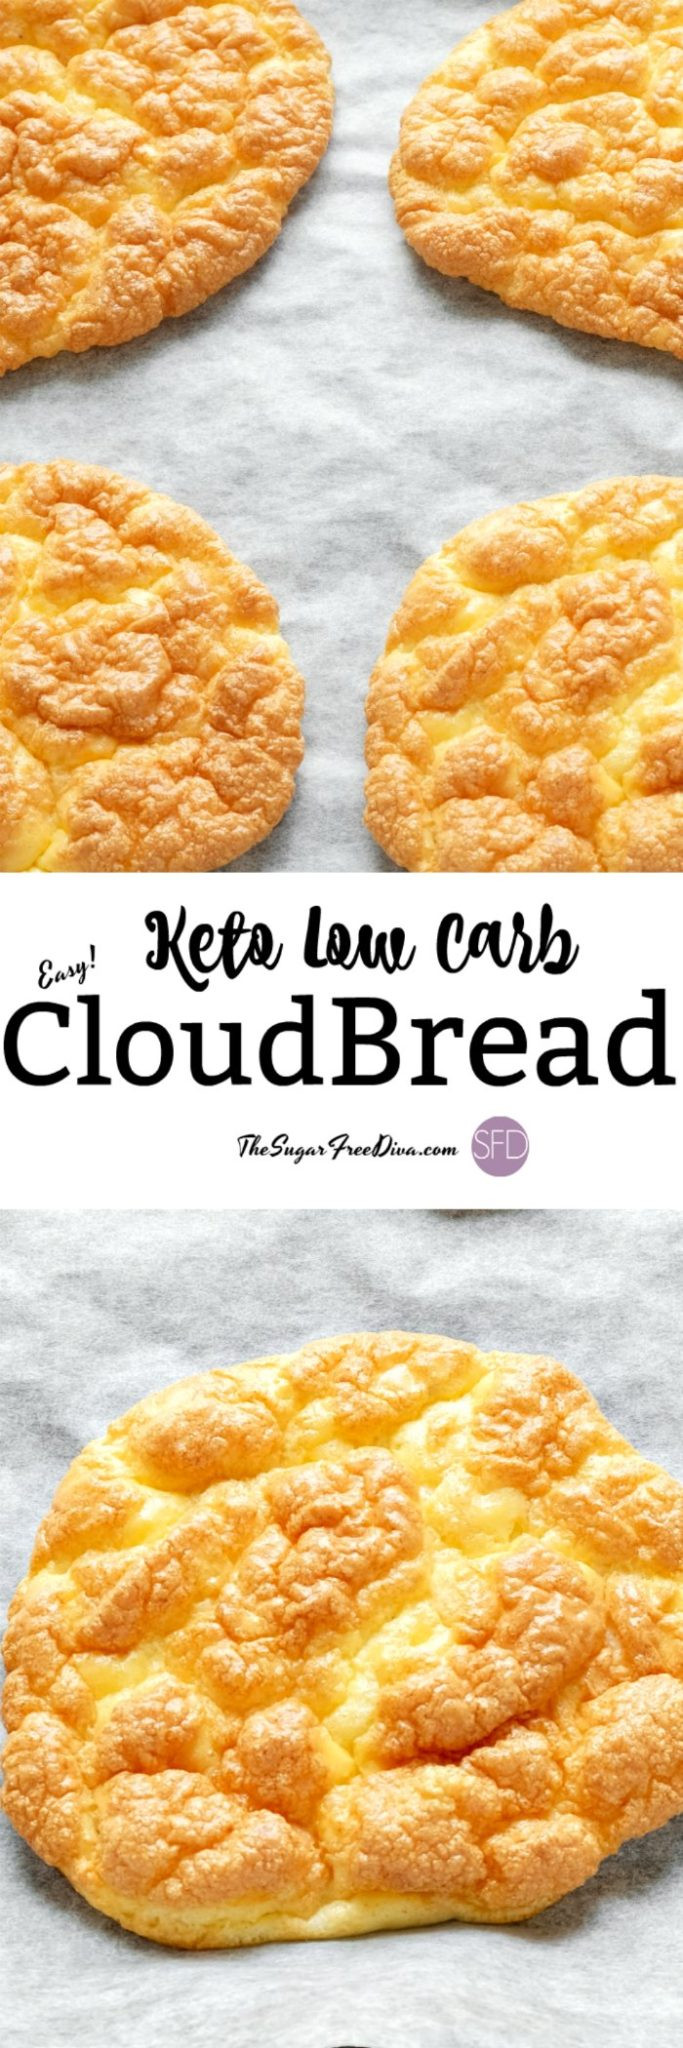 Keto Cloud Bread Videos
 Check out this recipe for Sugar Free and Keto Cloud Bread